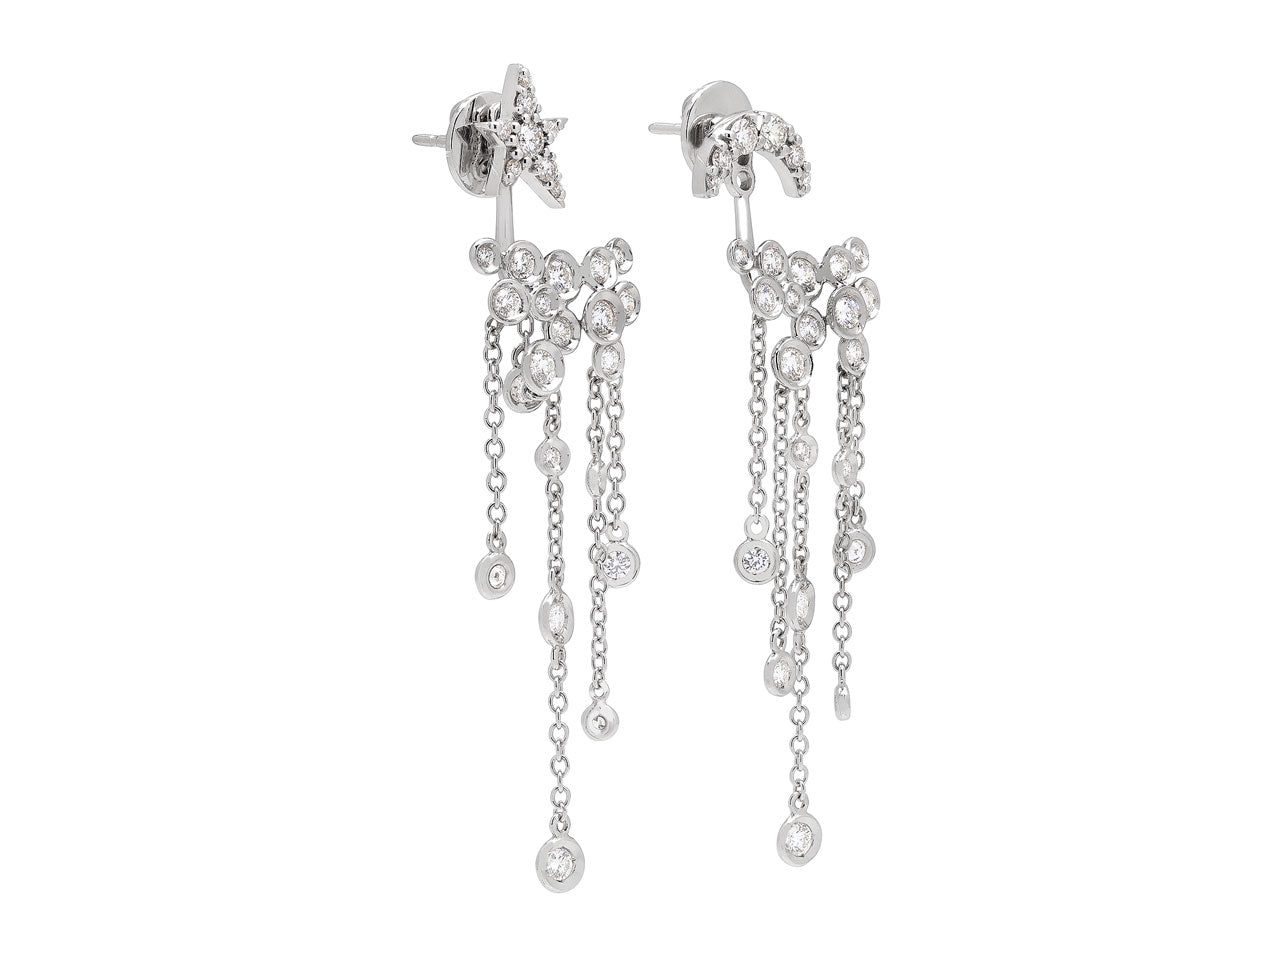 Giorgio Armani 'Firmamento' Diamond Earrings in 18K White Gold